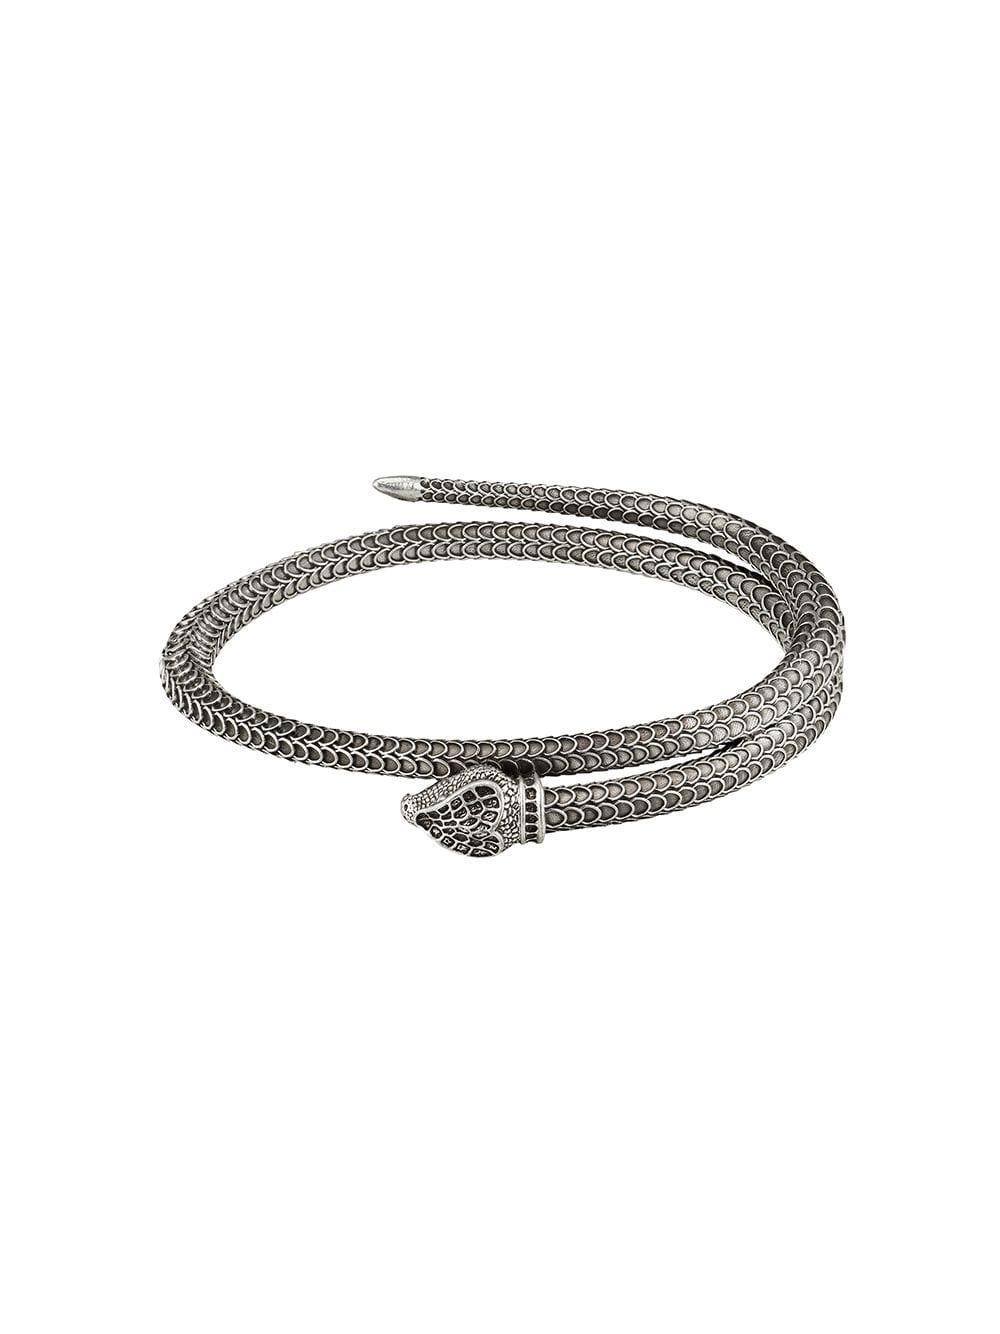 Gucci Metal Snake Bracelet in Silver (Metallic) for Men - Lyst